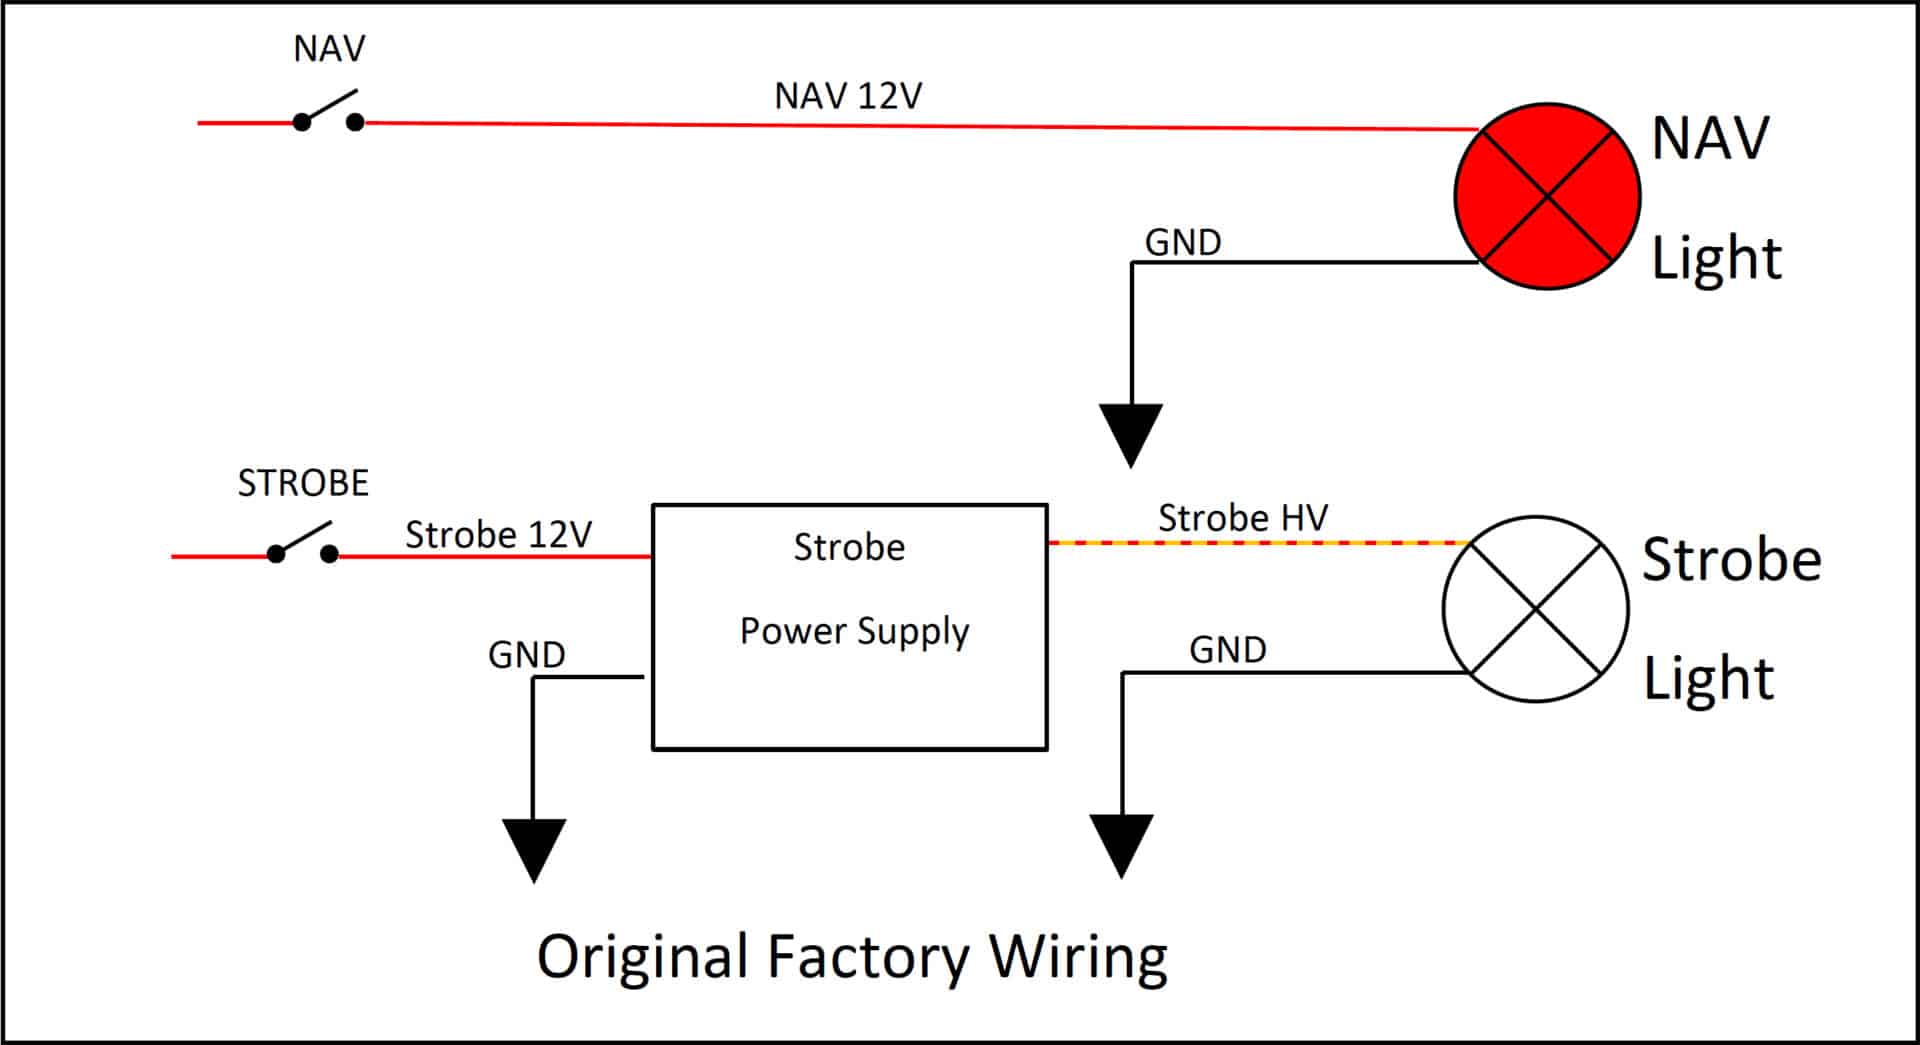 Strobe Light Wiring Diagram from uavionix.com